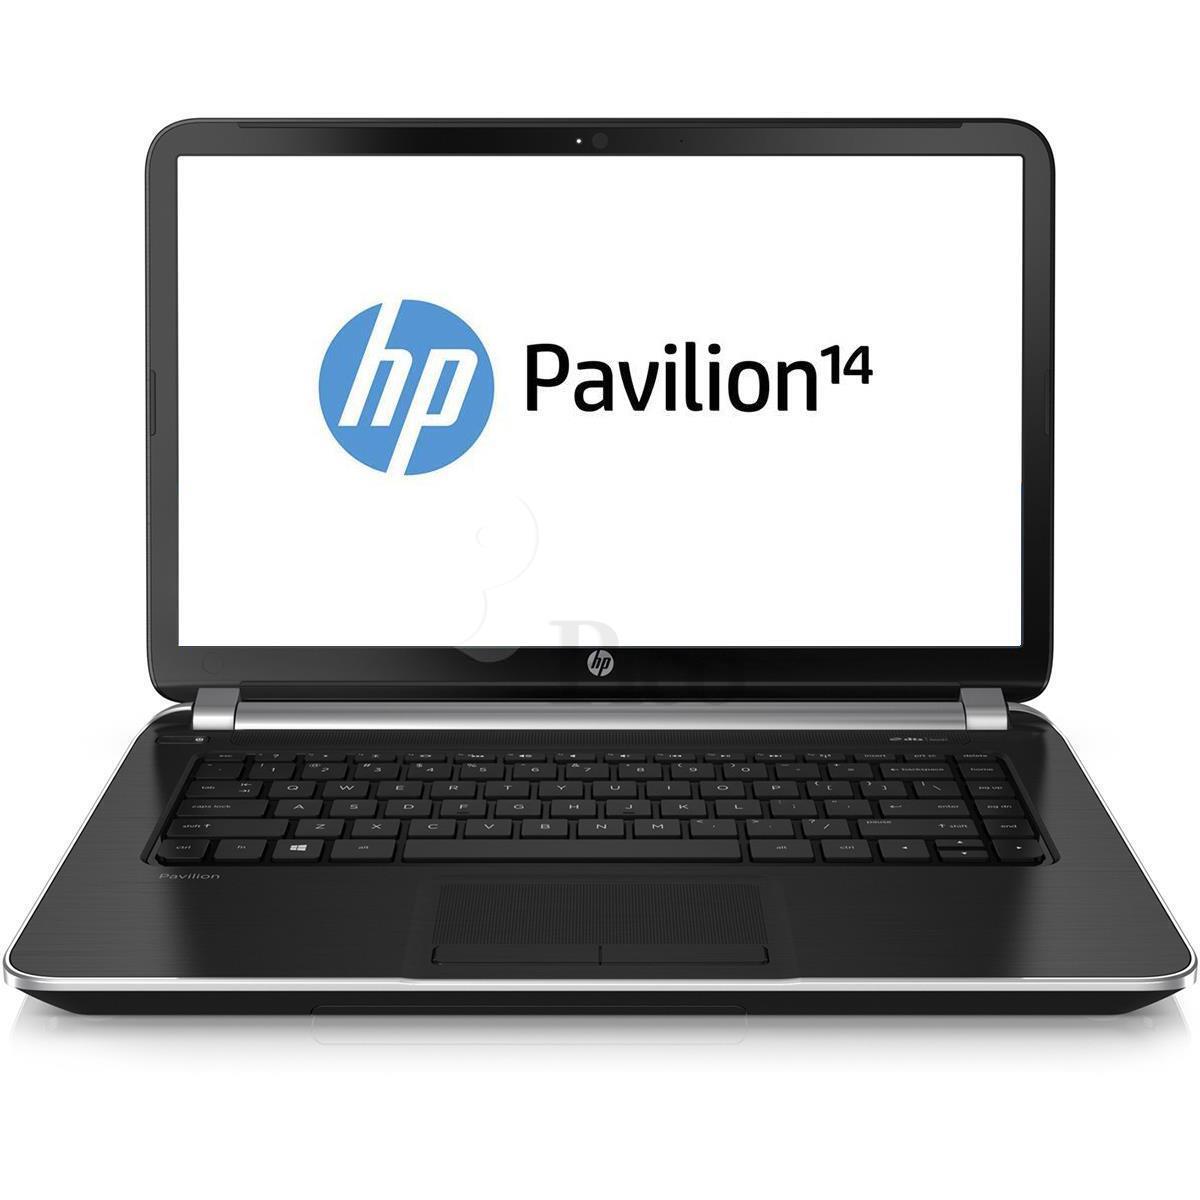 Laptop HP Pavilion 14n212TU (F7Q84PA) - Intel Core i3-3217U 1.8Ghz, 2GB DDR3, 500GB HDD, VGA Intel HD Graphics 4000, 14 inch